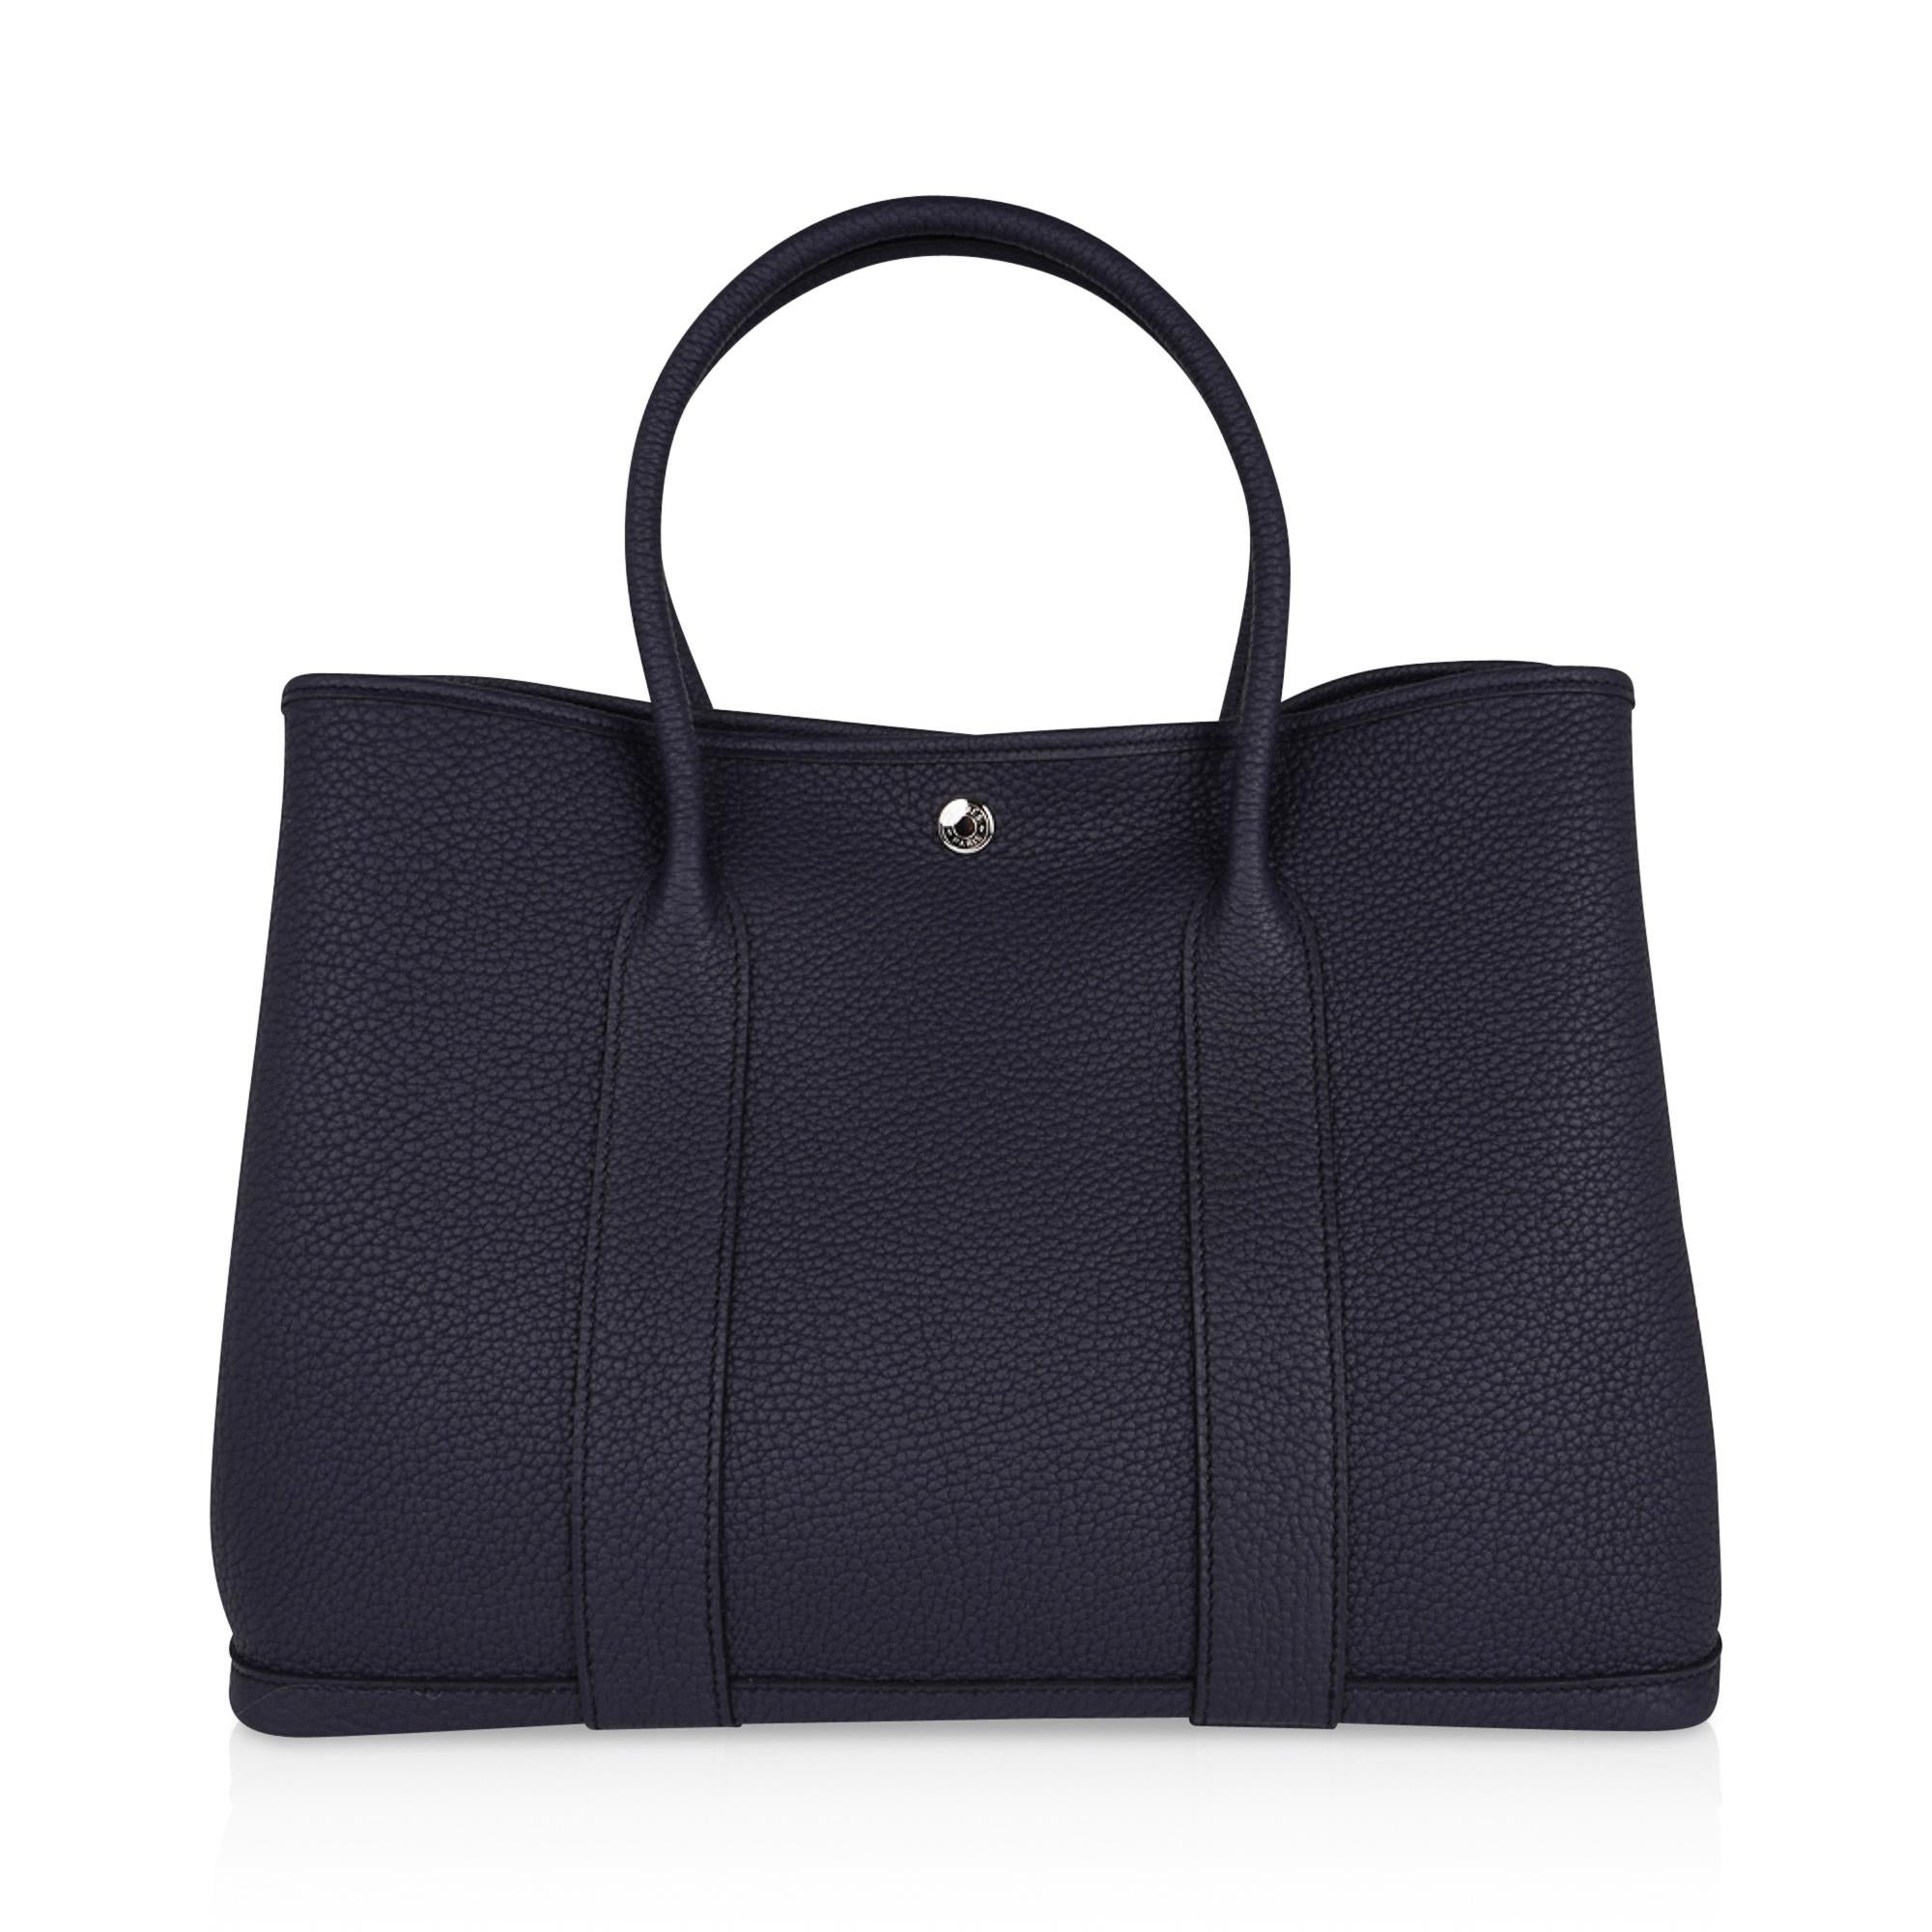 Black Hermes Bag Garden Party 36 Bag Bleu Indigo Negonda Leather Palladium New w/Box